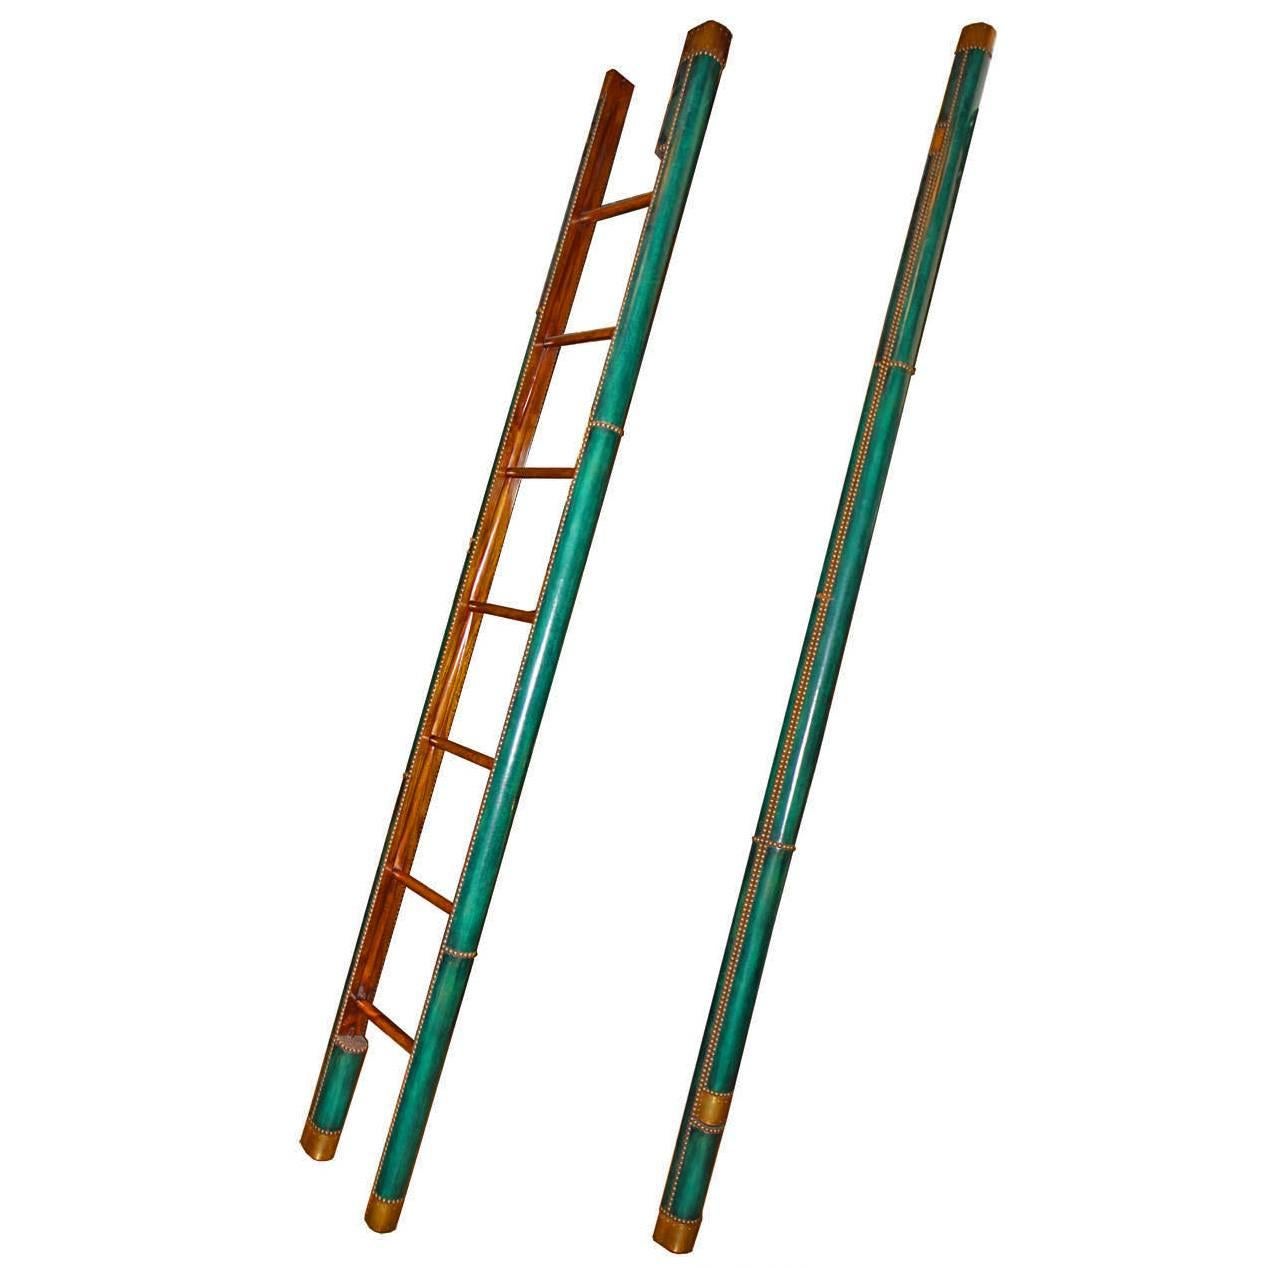 C. Mariani Custom Mahogany Folding Library Ladder in the English Taste